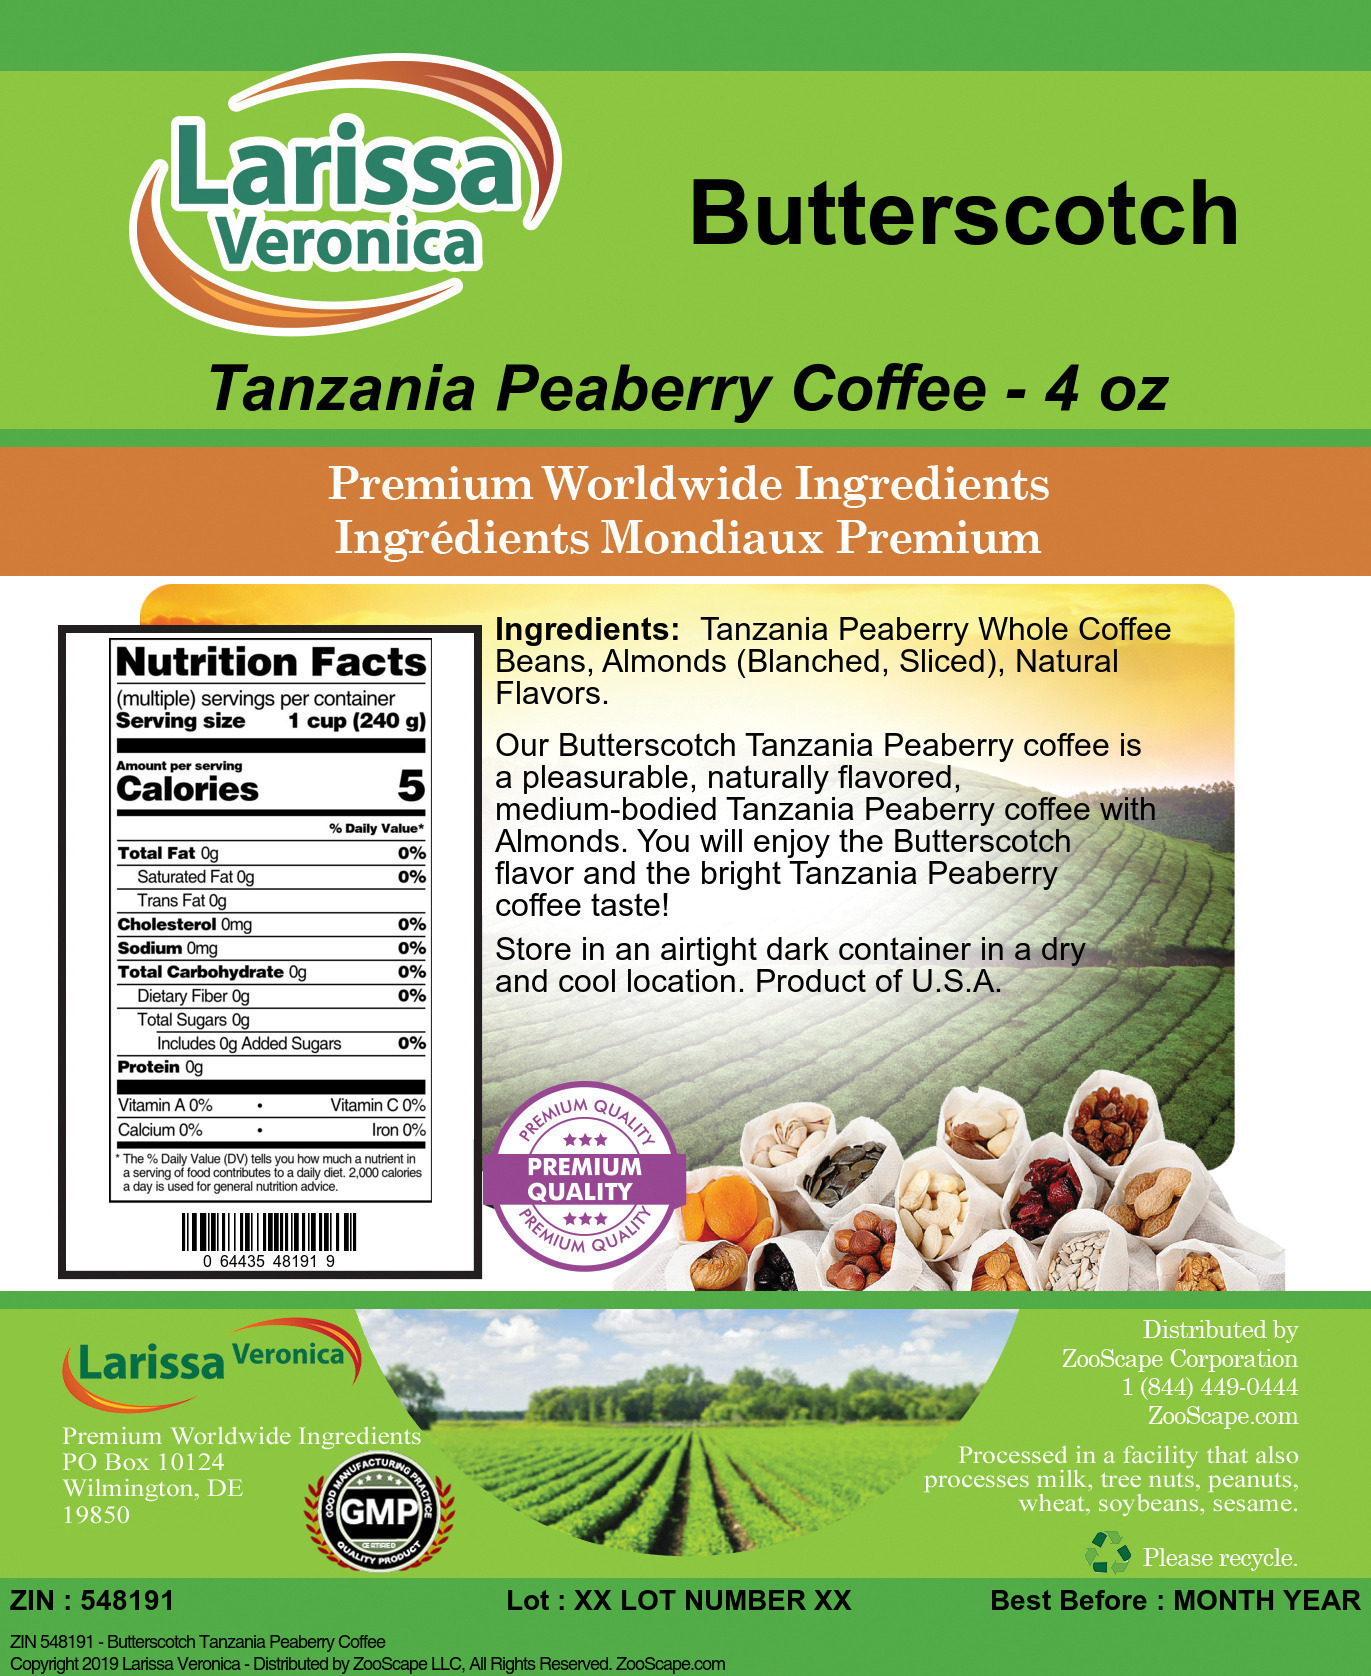 Butterscotch Tanzania Peaberry Coffee - Label